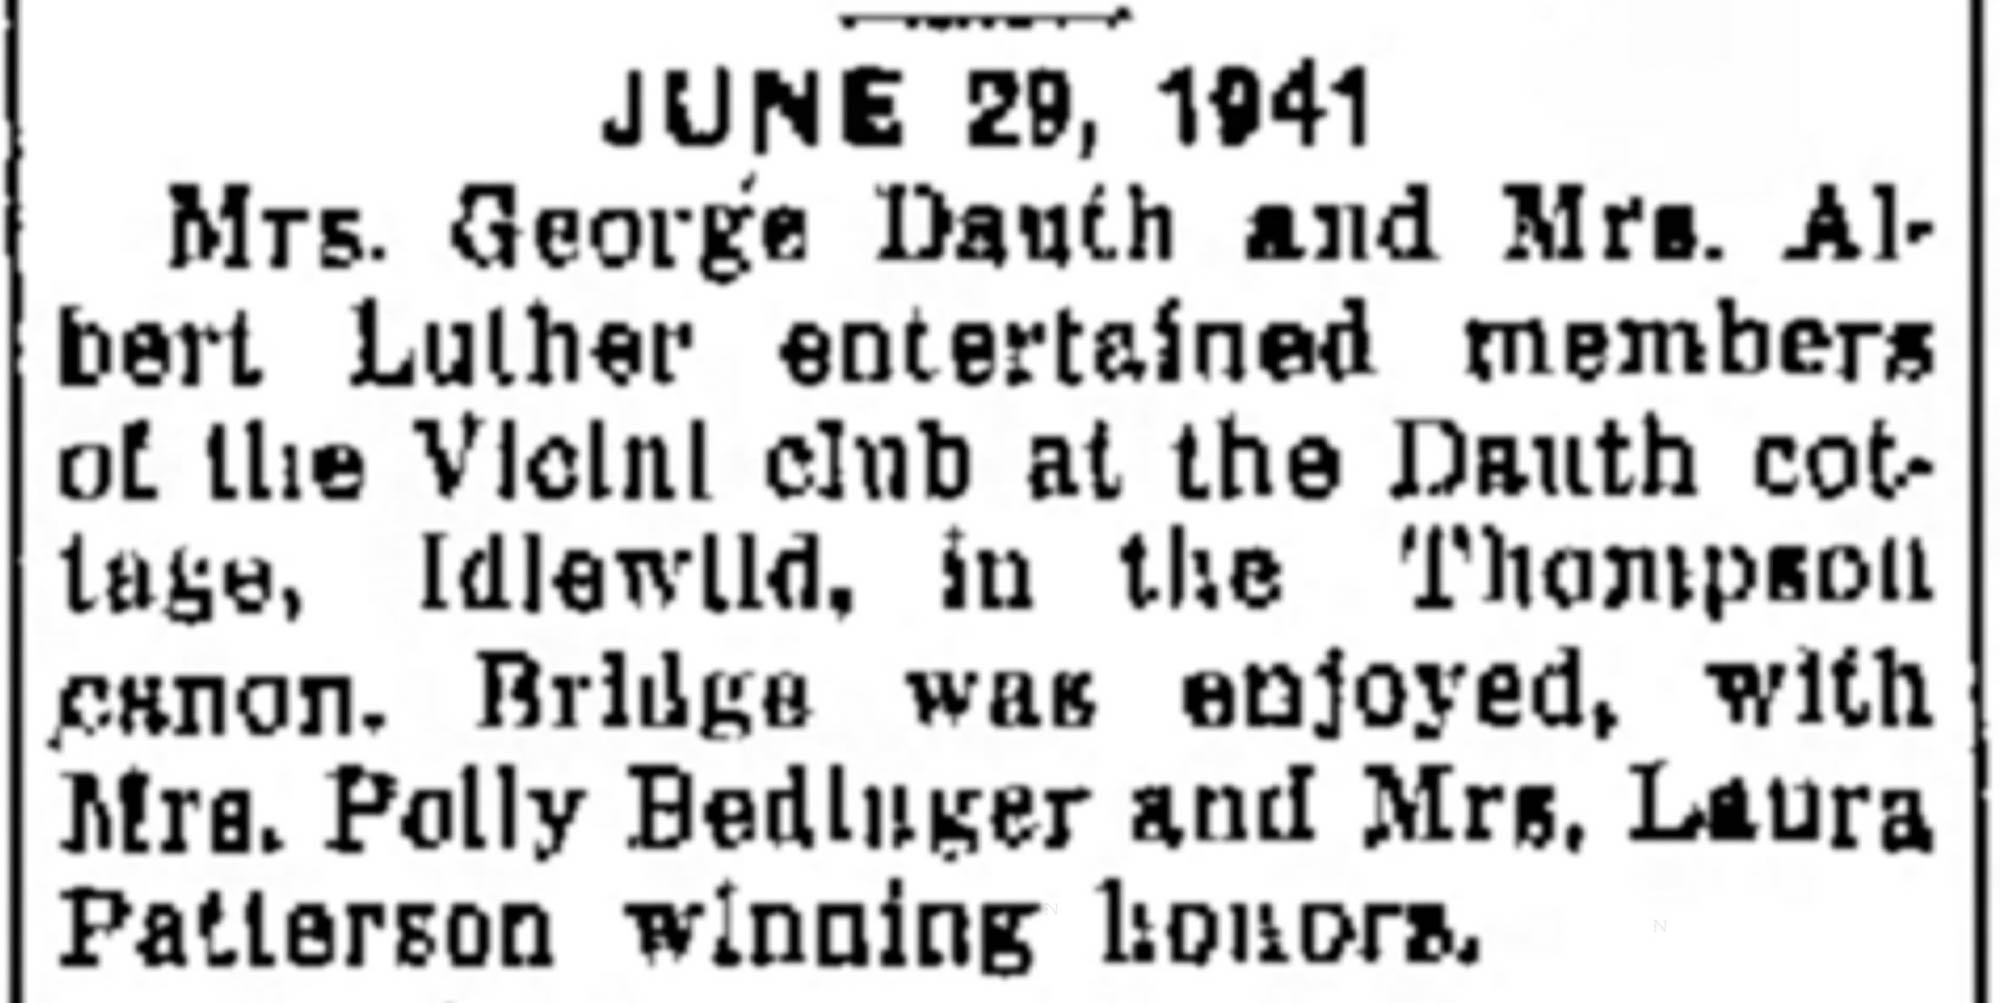 Idlewild Lodge - idlewildlodge.github.io - 1951-06-29 - Greeley Daily Tribune - Florence Dauth Hosting Vicini Club at Idlewild Lodge